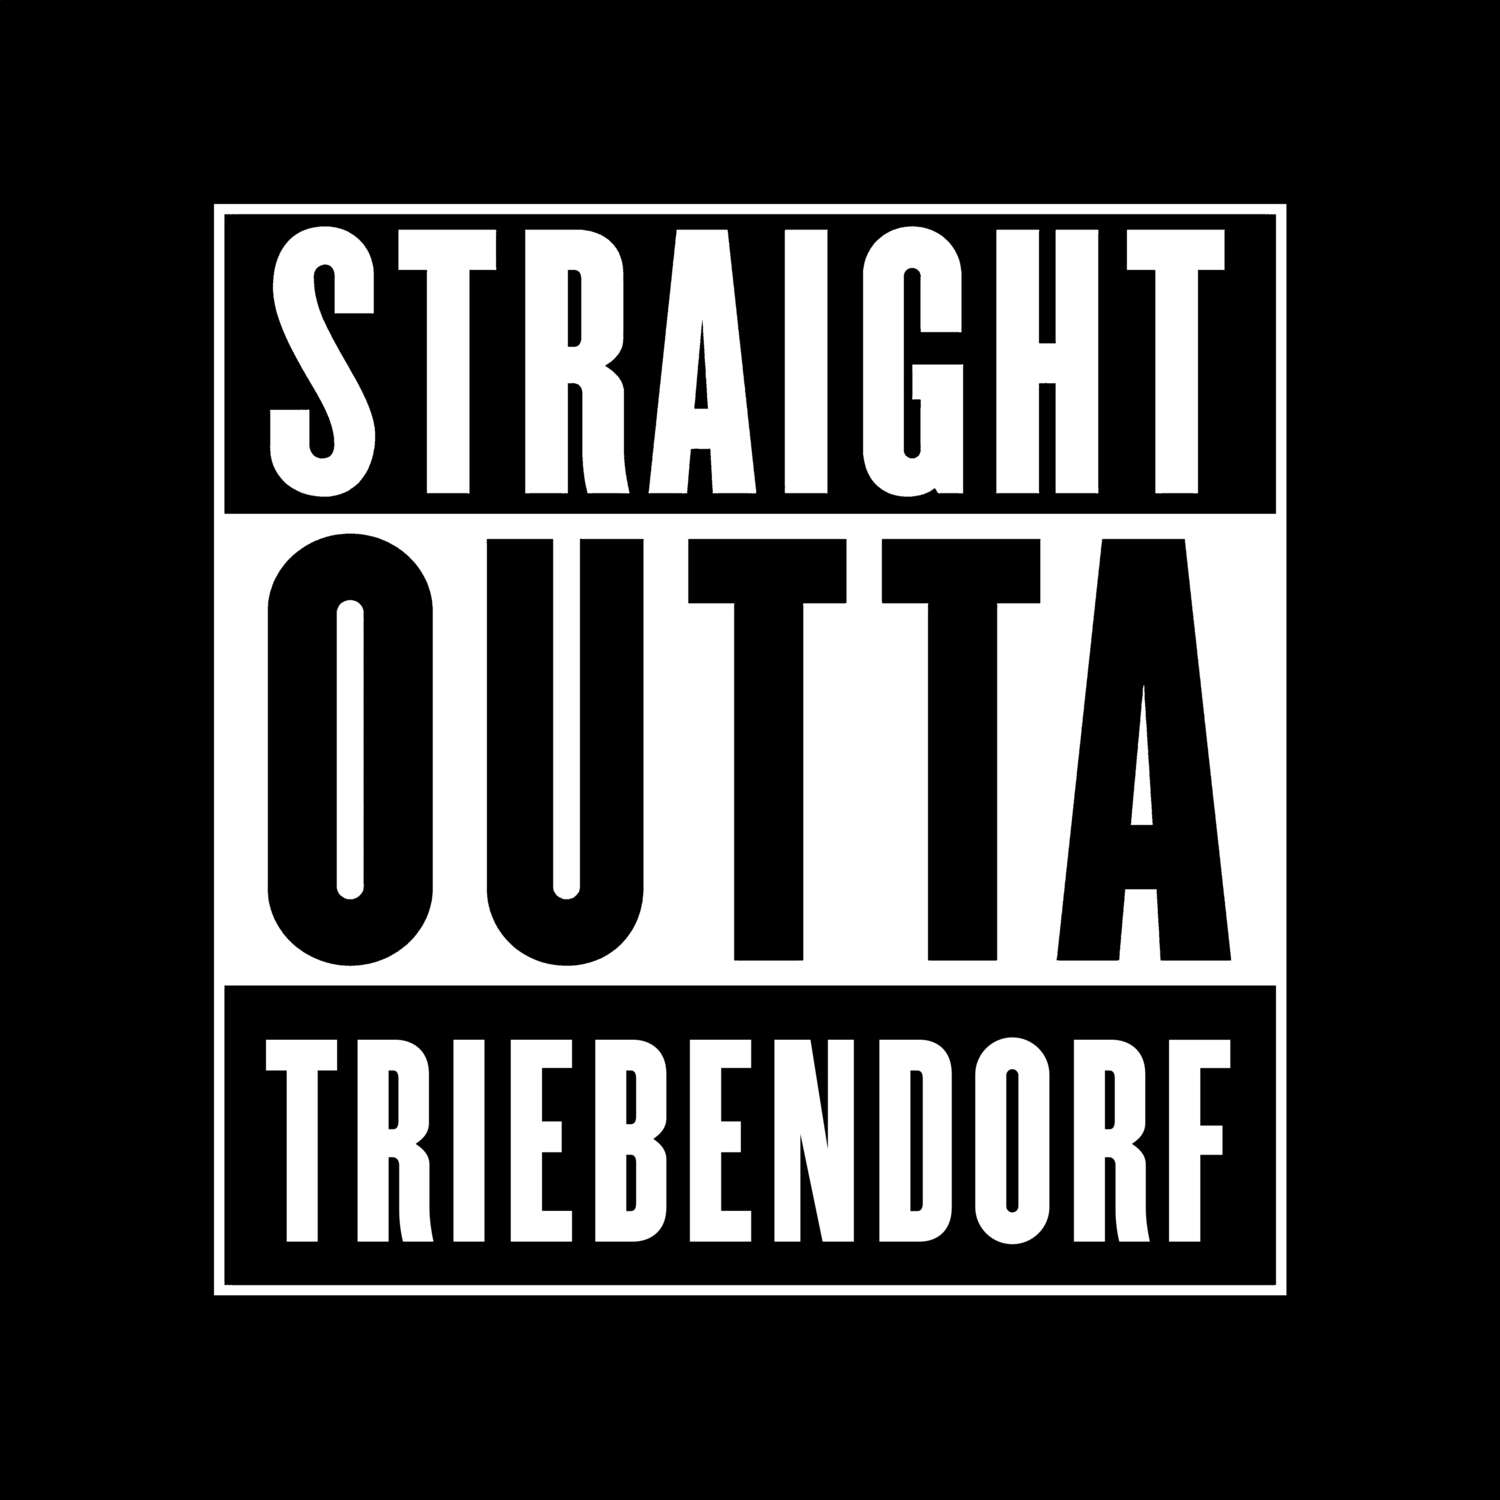 Triebendorf T-Shirt »Straight Outta«